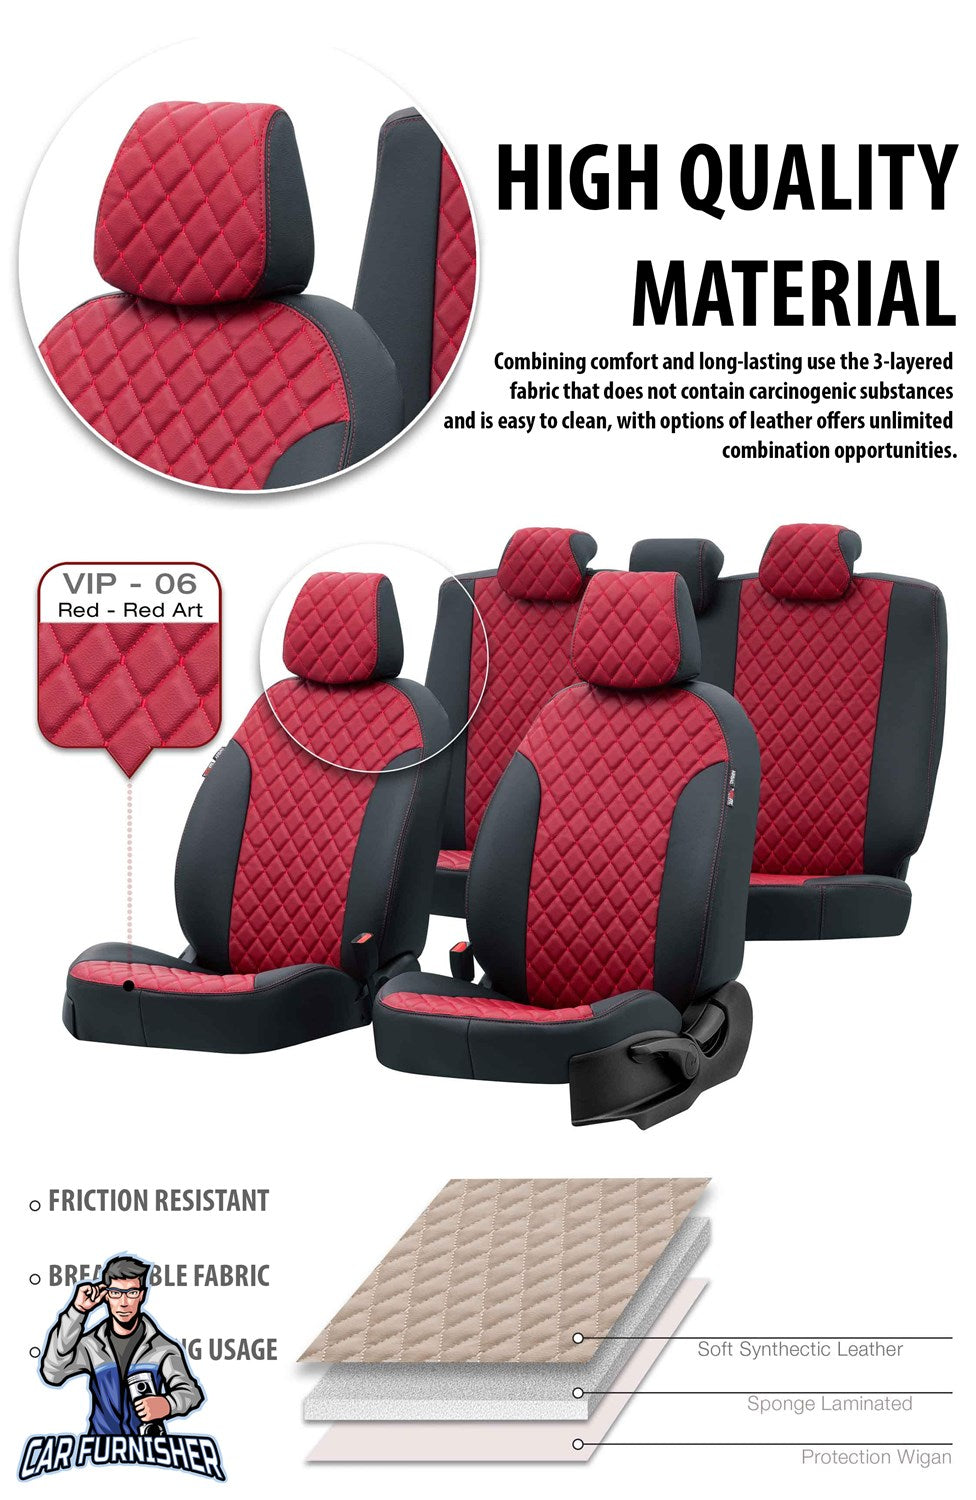 Chery Alia Seat Covers Madrid Leather Design Beige Leather